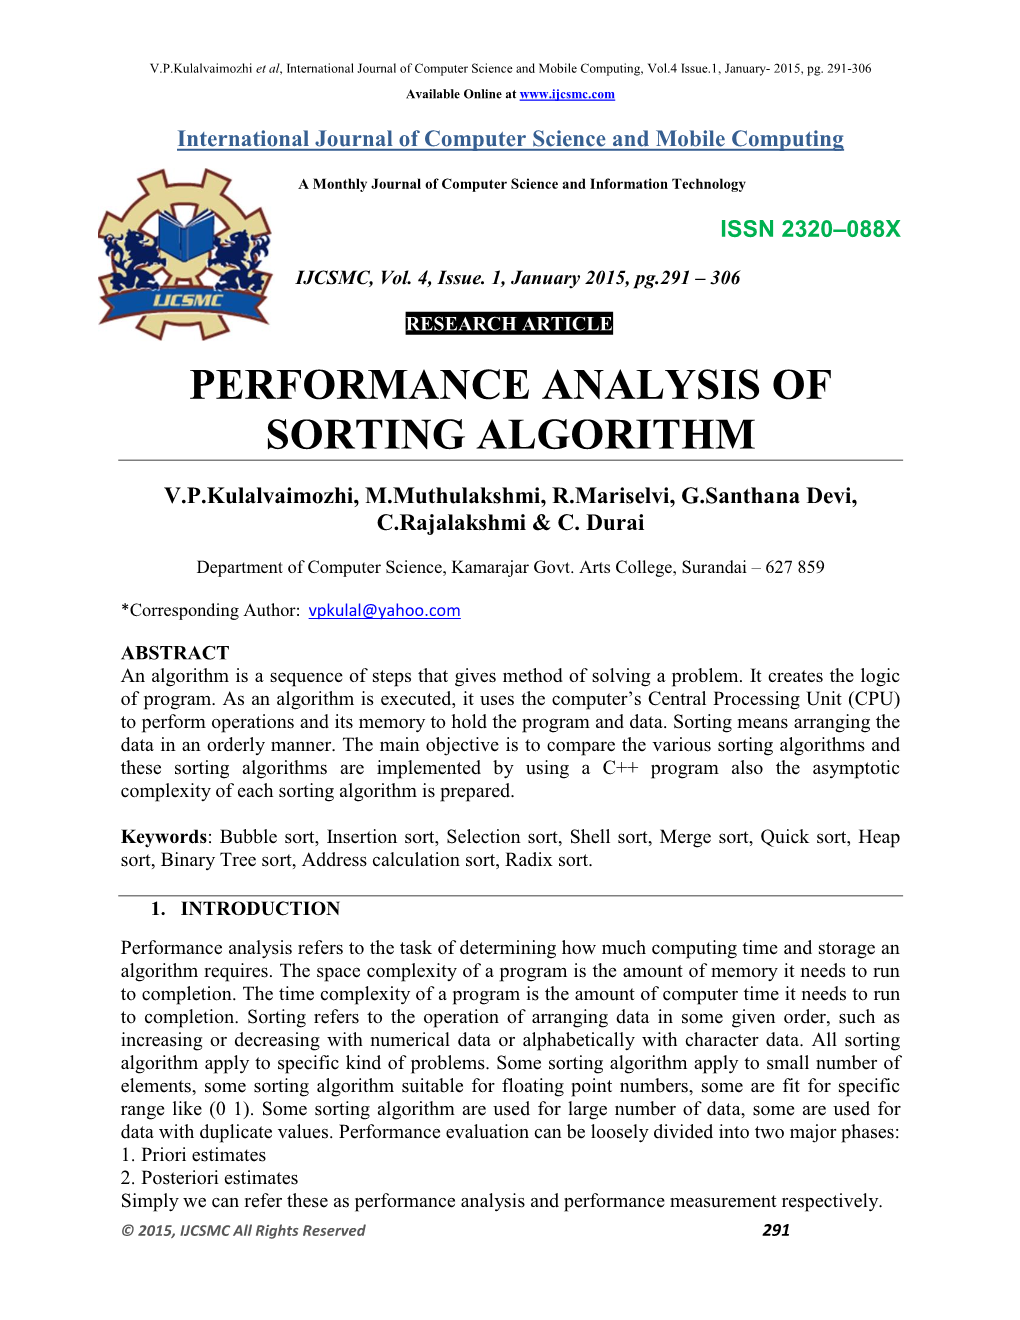 Performance Analysis of Sorting Algorithm